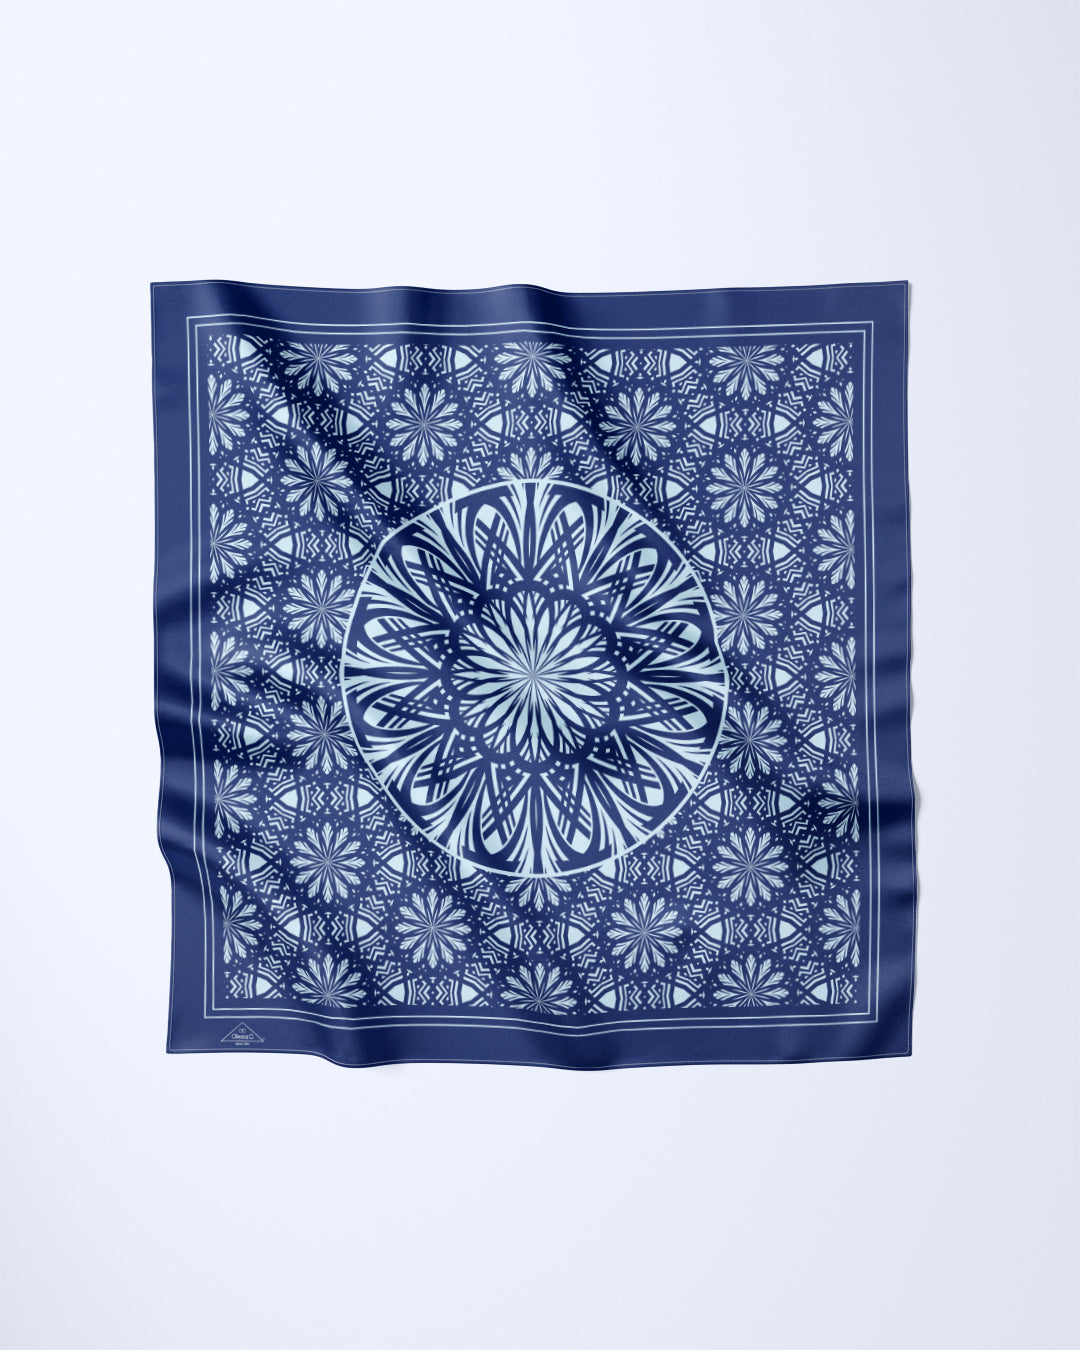 NAVY LIGHT BLUE SERENITY Mandala Designer Silk Scarf by Alesia Chaika